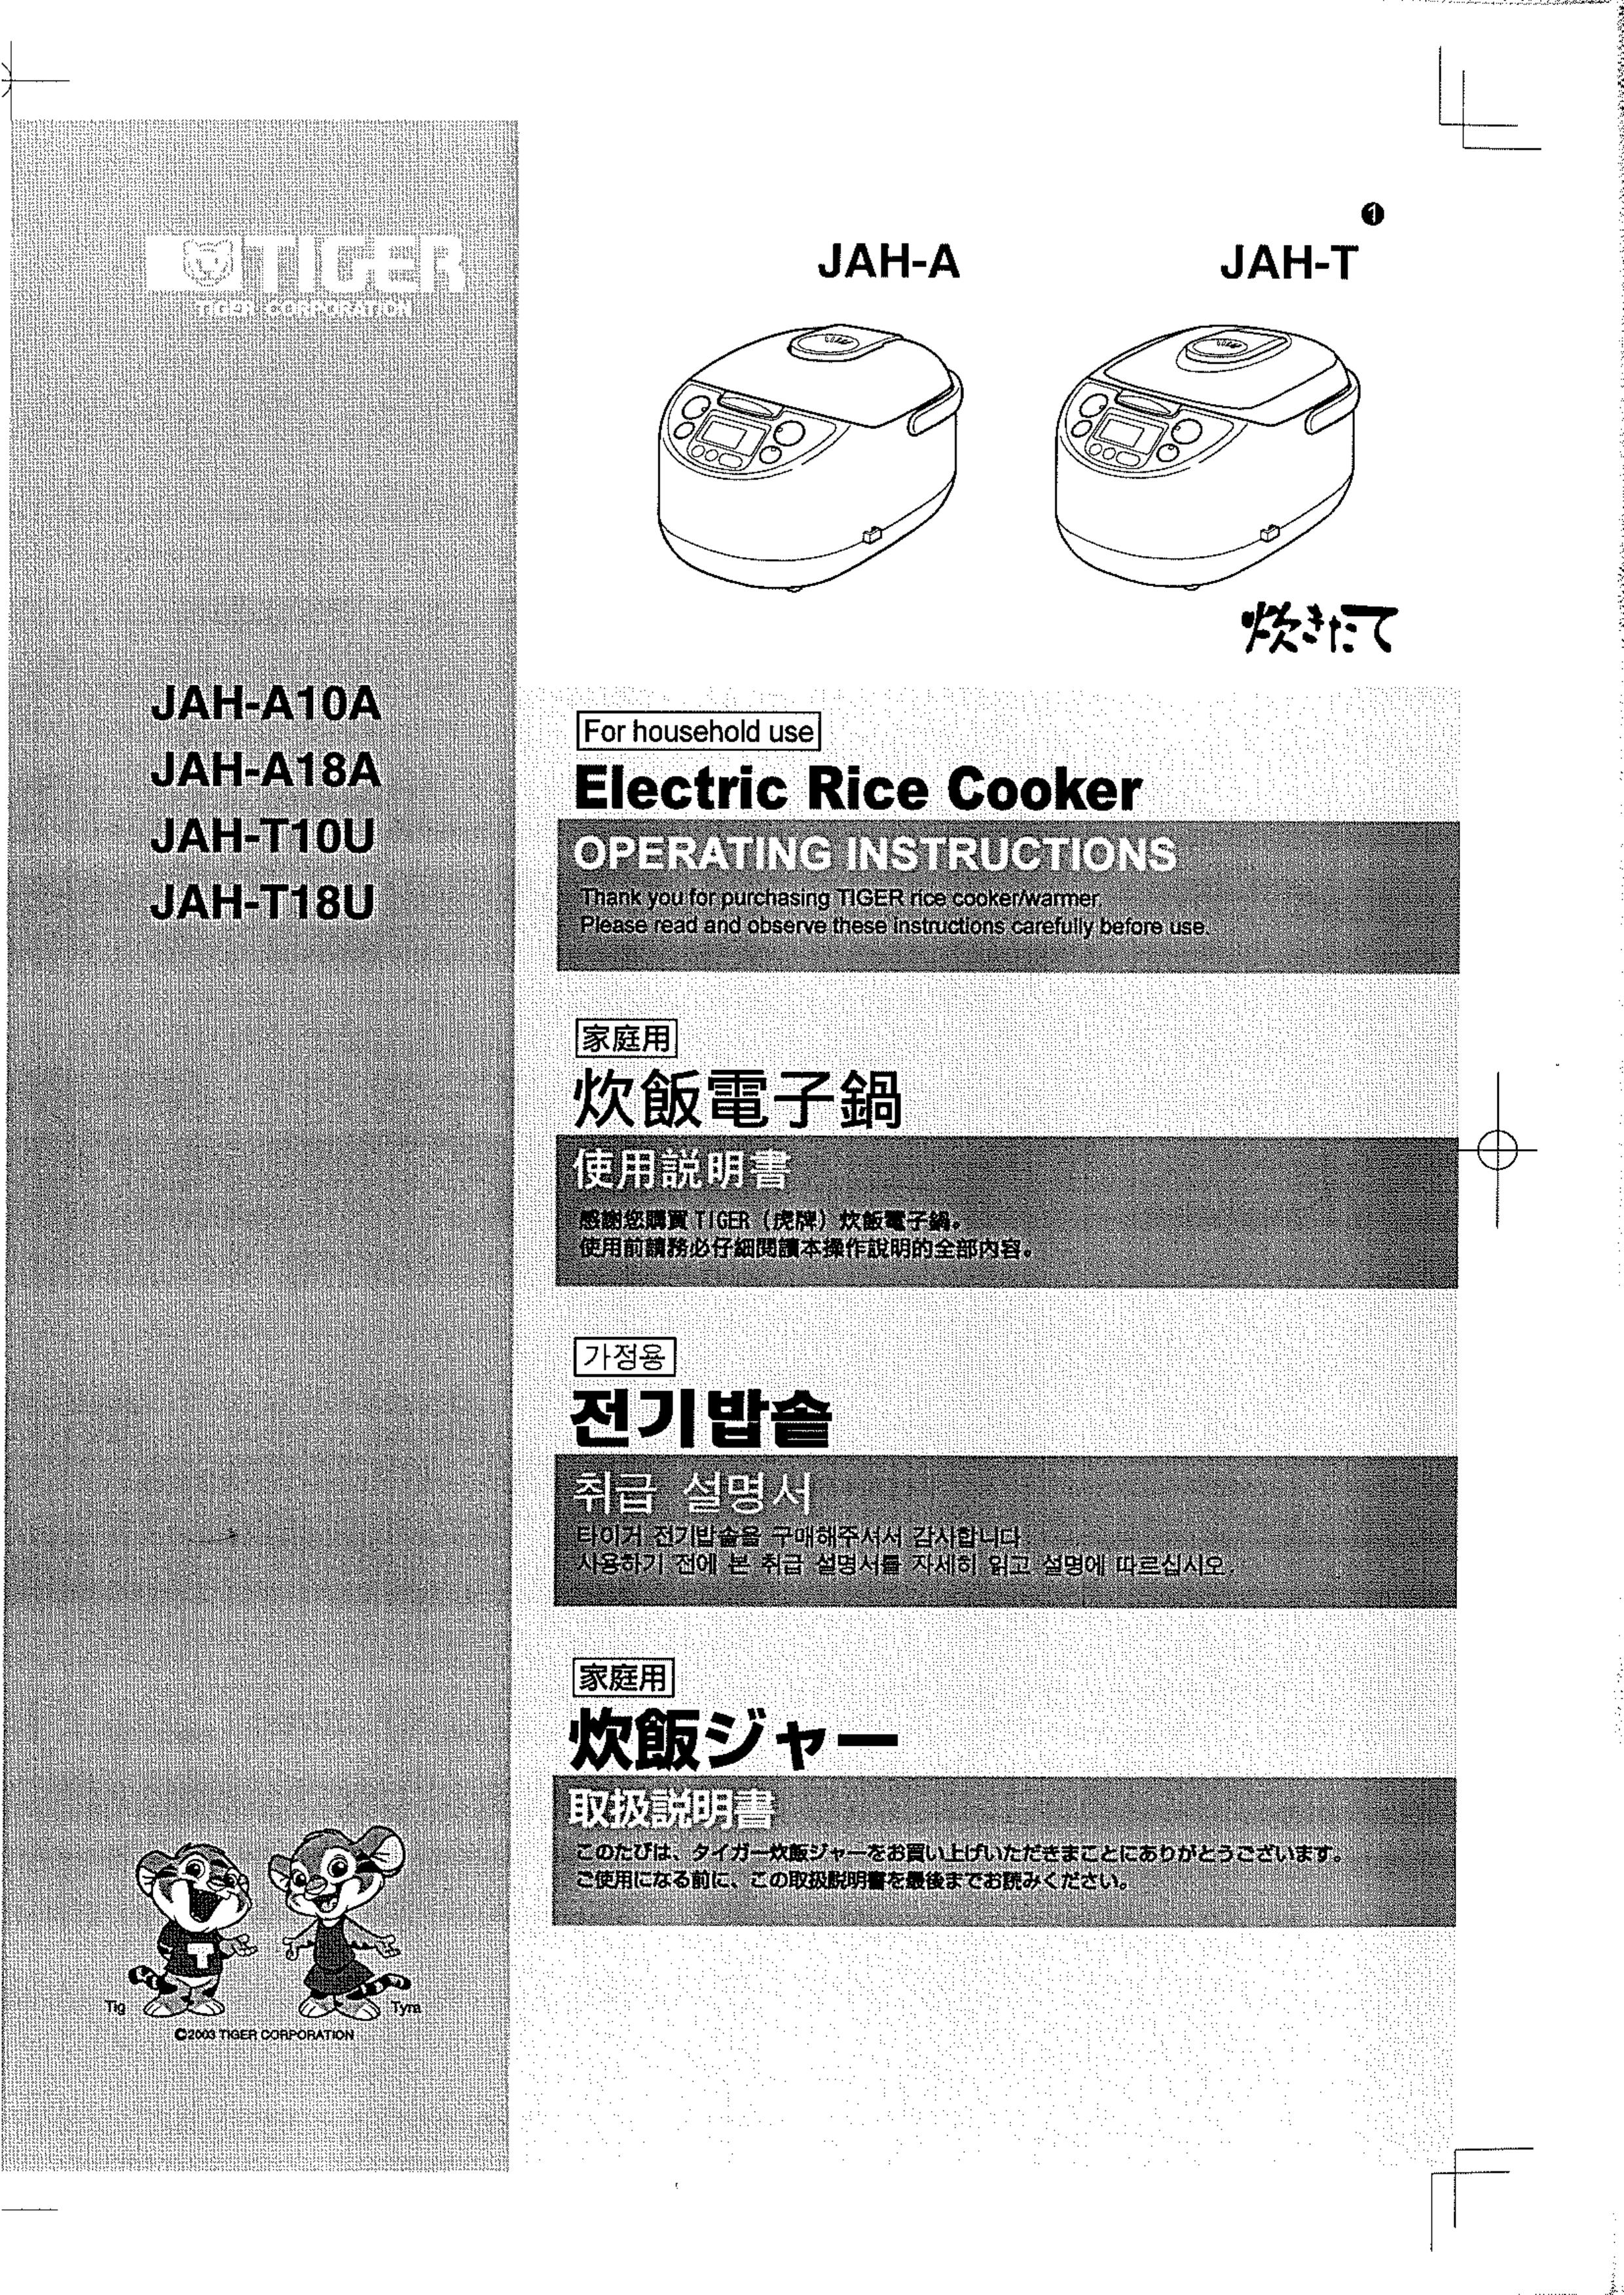 Tiger Products Co., Ltd JAH-T18U Rice Cooker User Manual